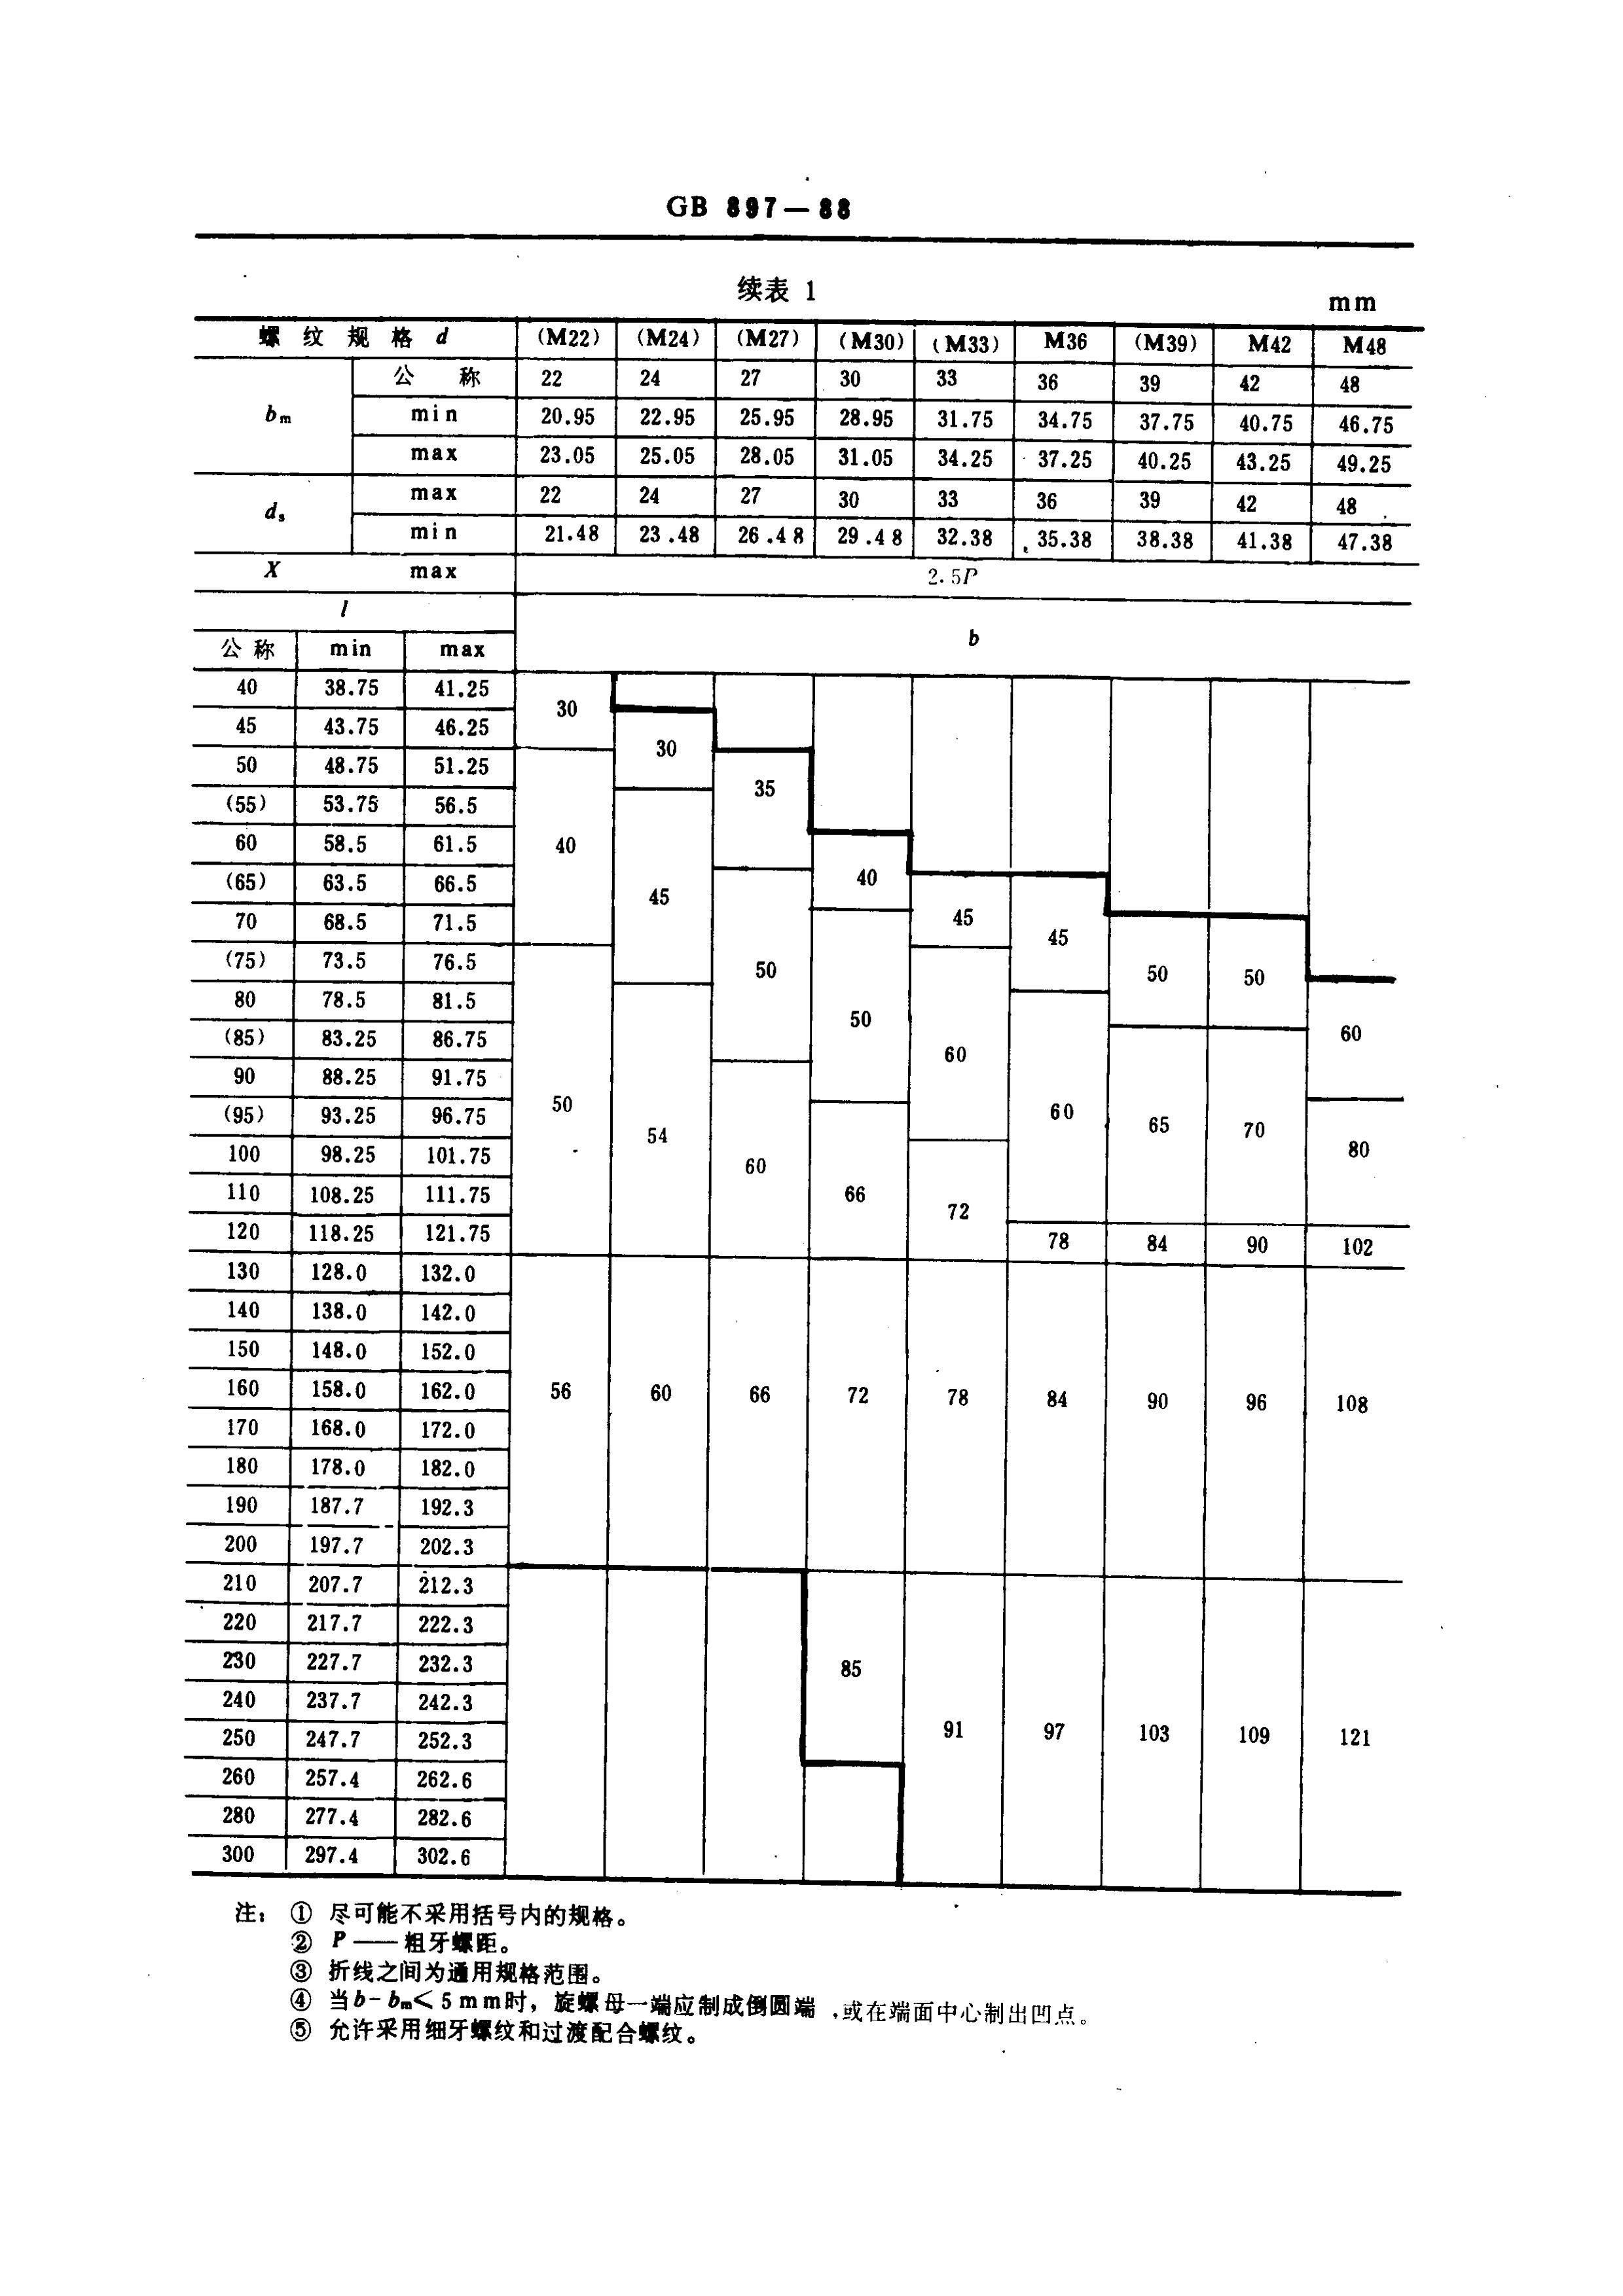 GB 897-1988 ˫ͷ bm=1d.pdf3ҳ